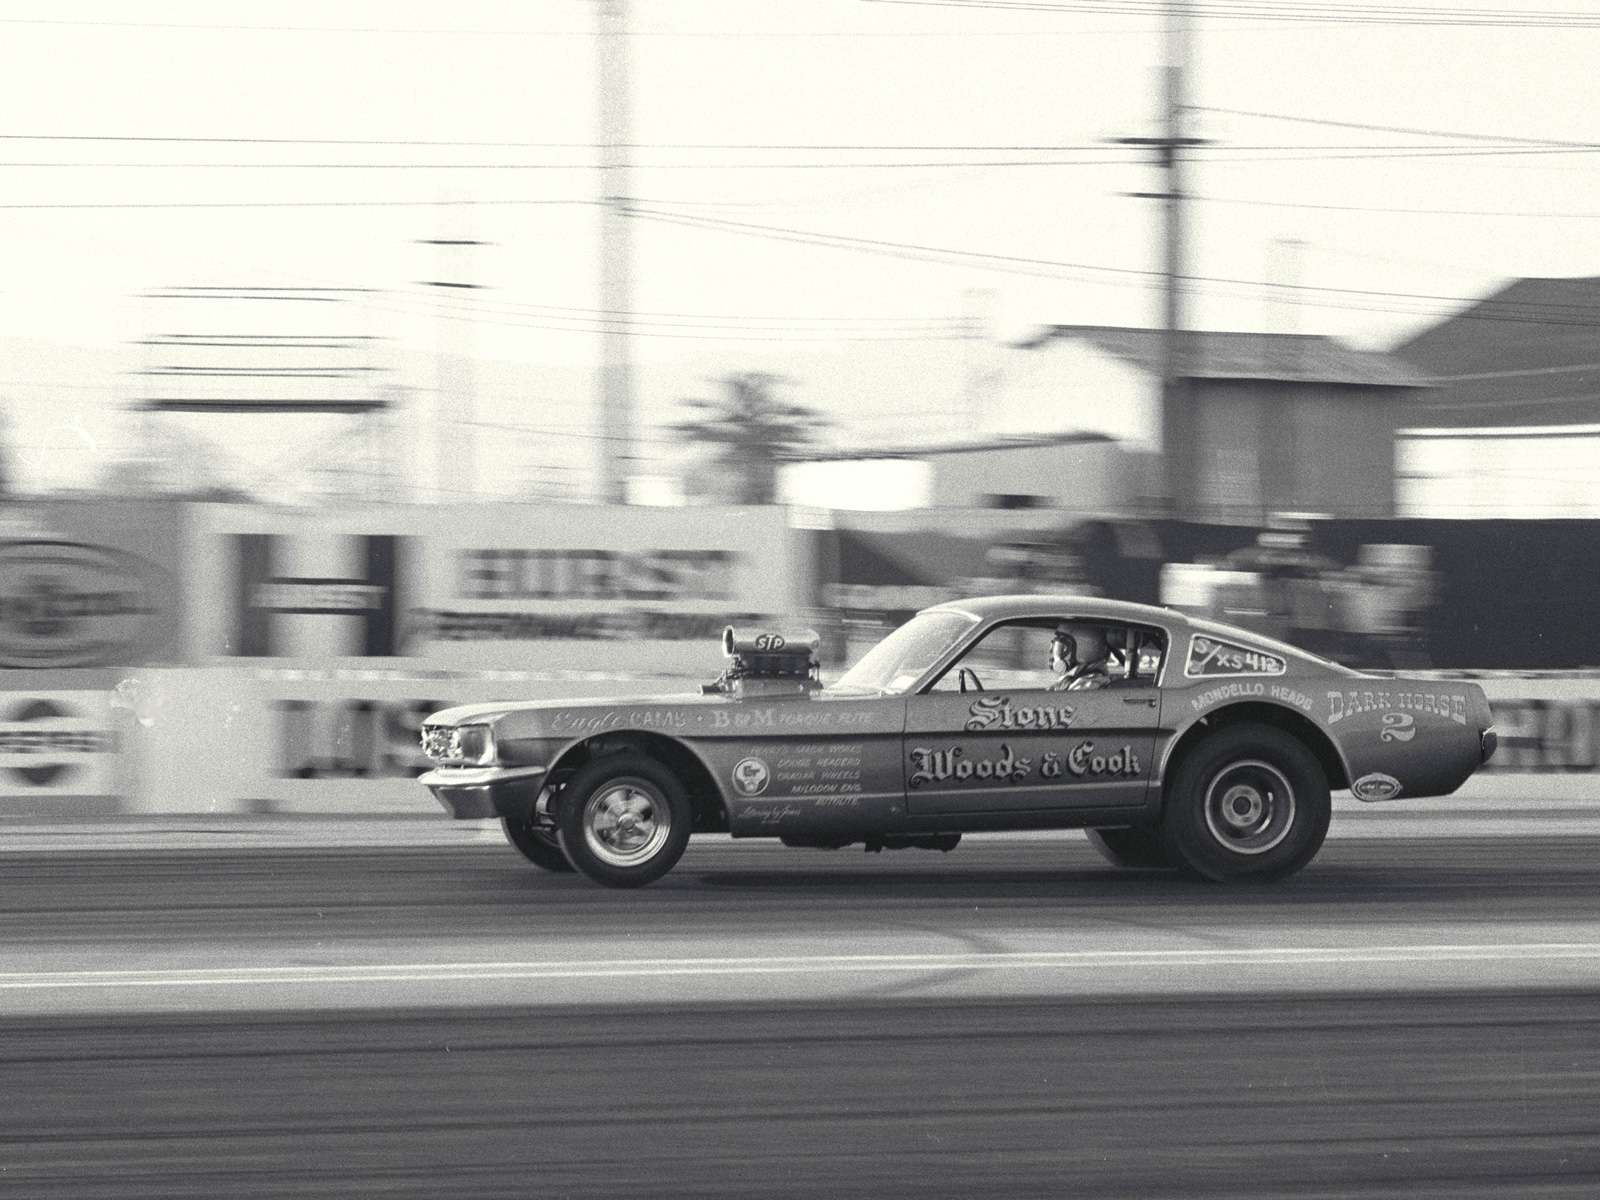 66 Mustang Rear Suspension Wallpaper | PicsWallpaper.com